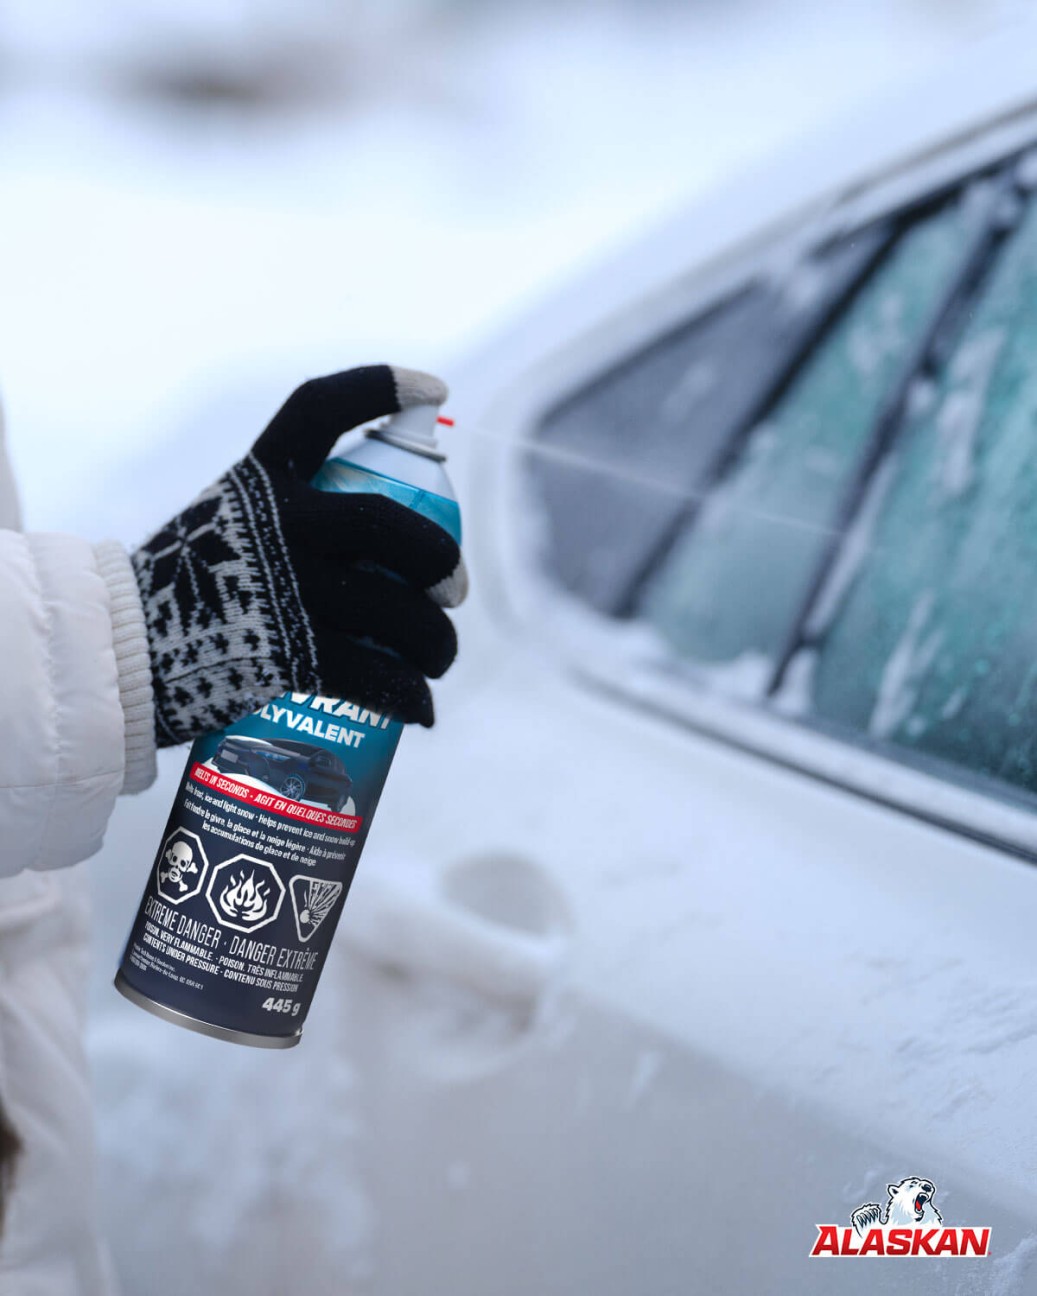  Deicer for car windshield, Windshield Deicer Spray